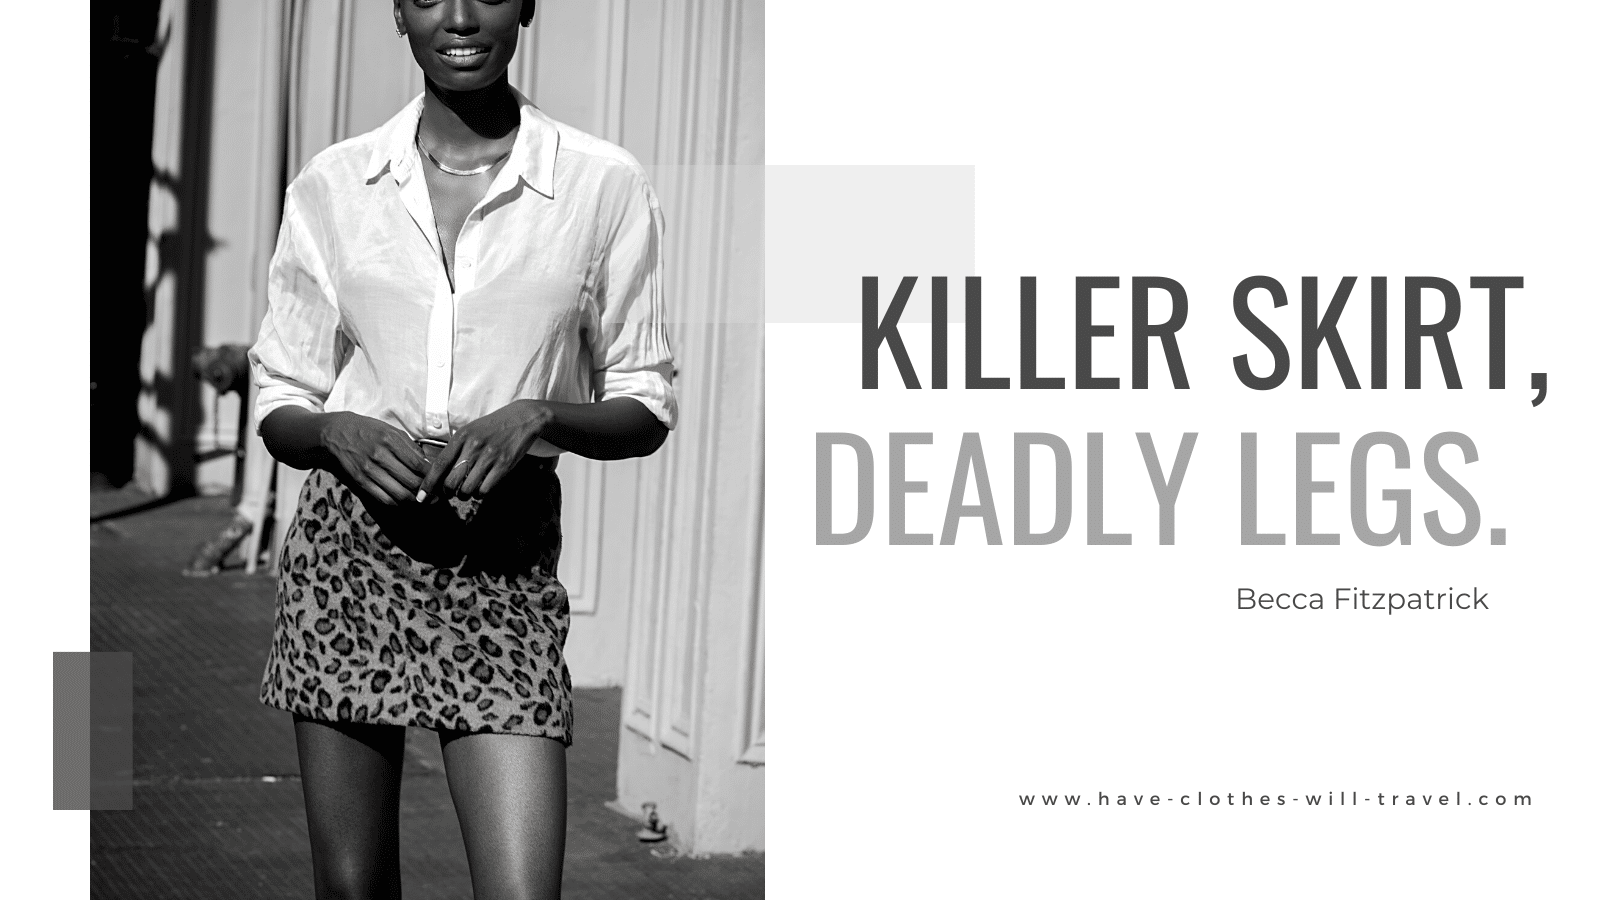 11. Killer skirt, deadly legs. — Becca Fitzpatrick